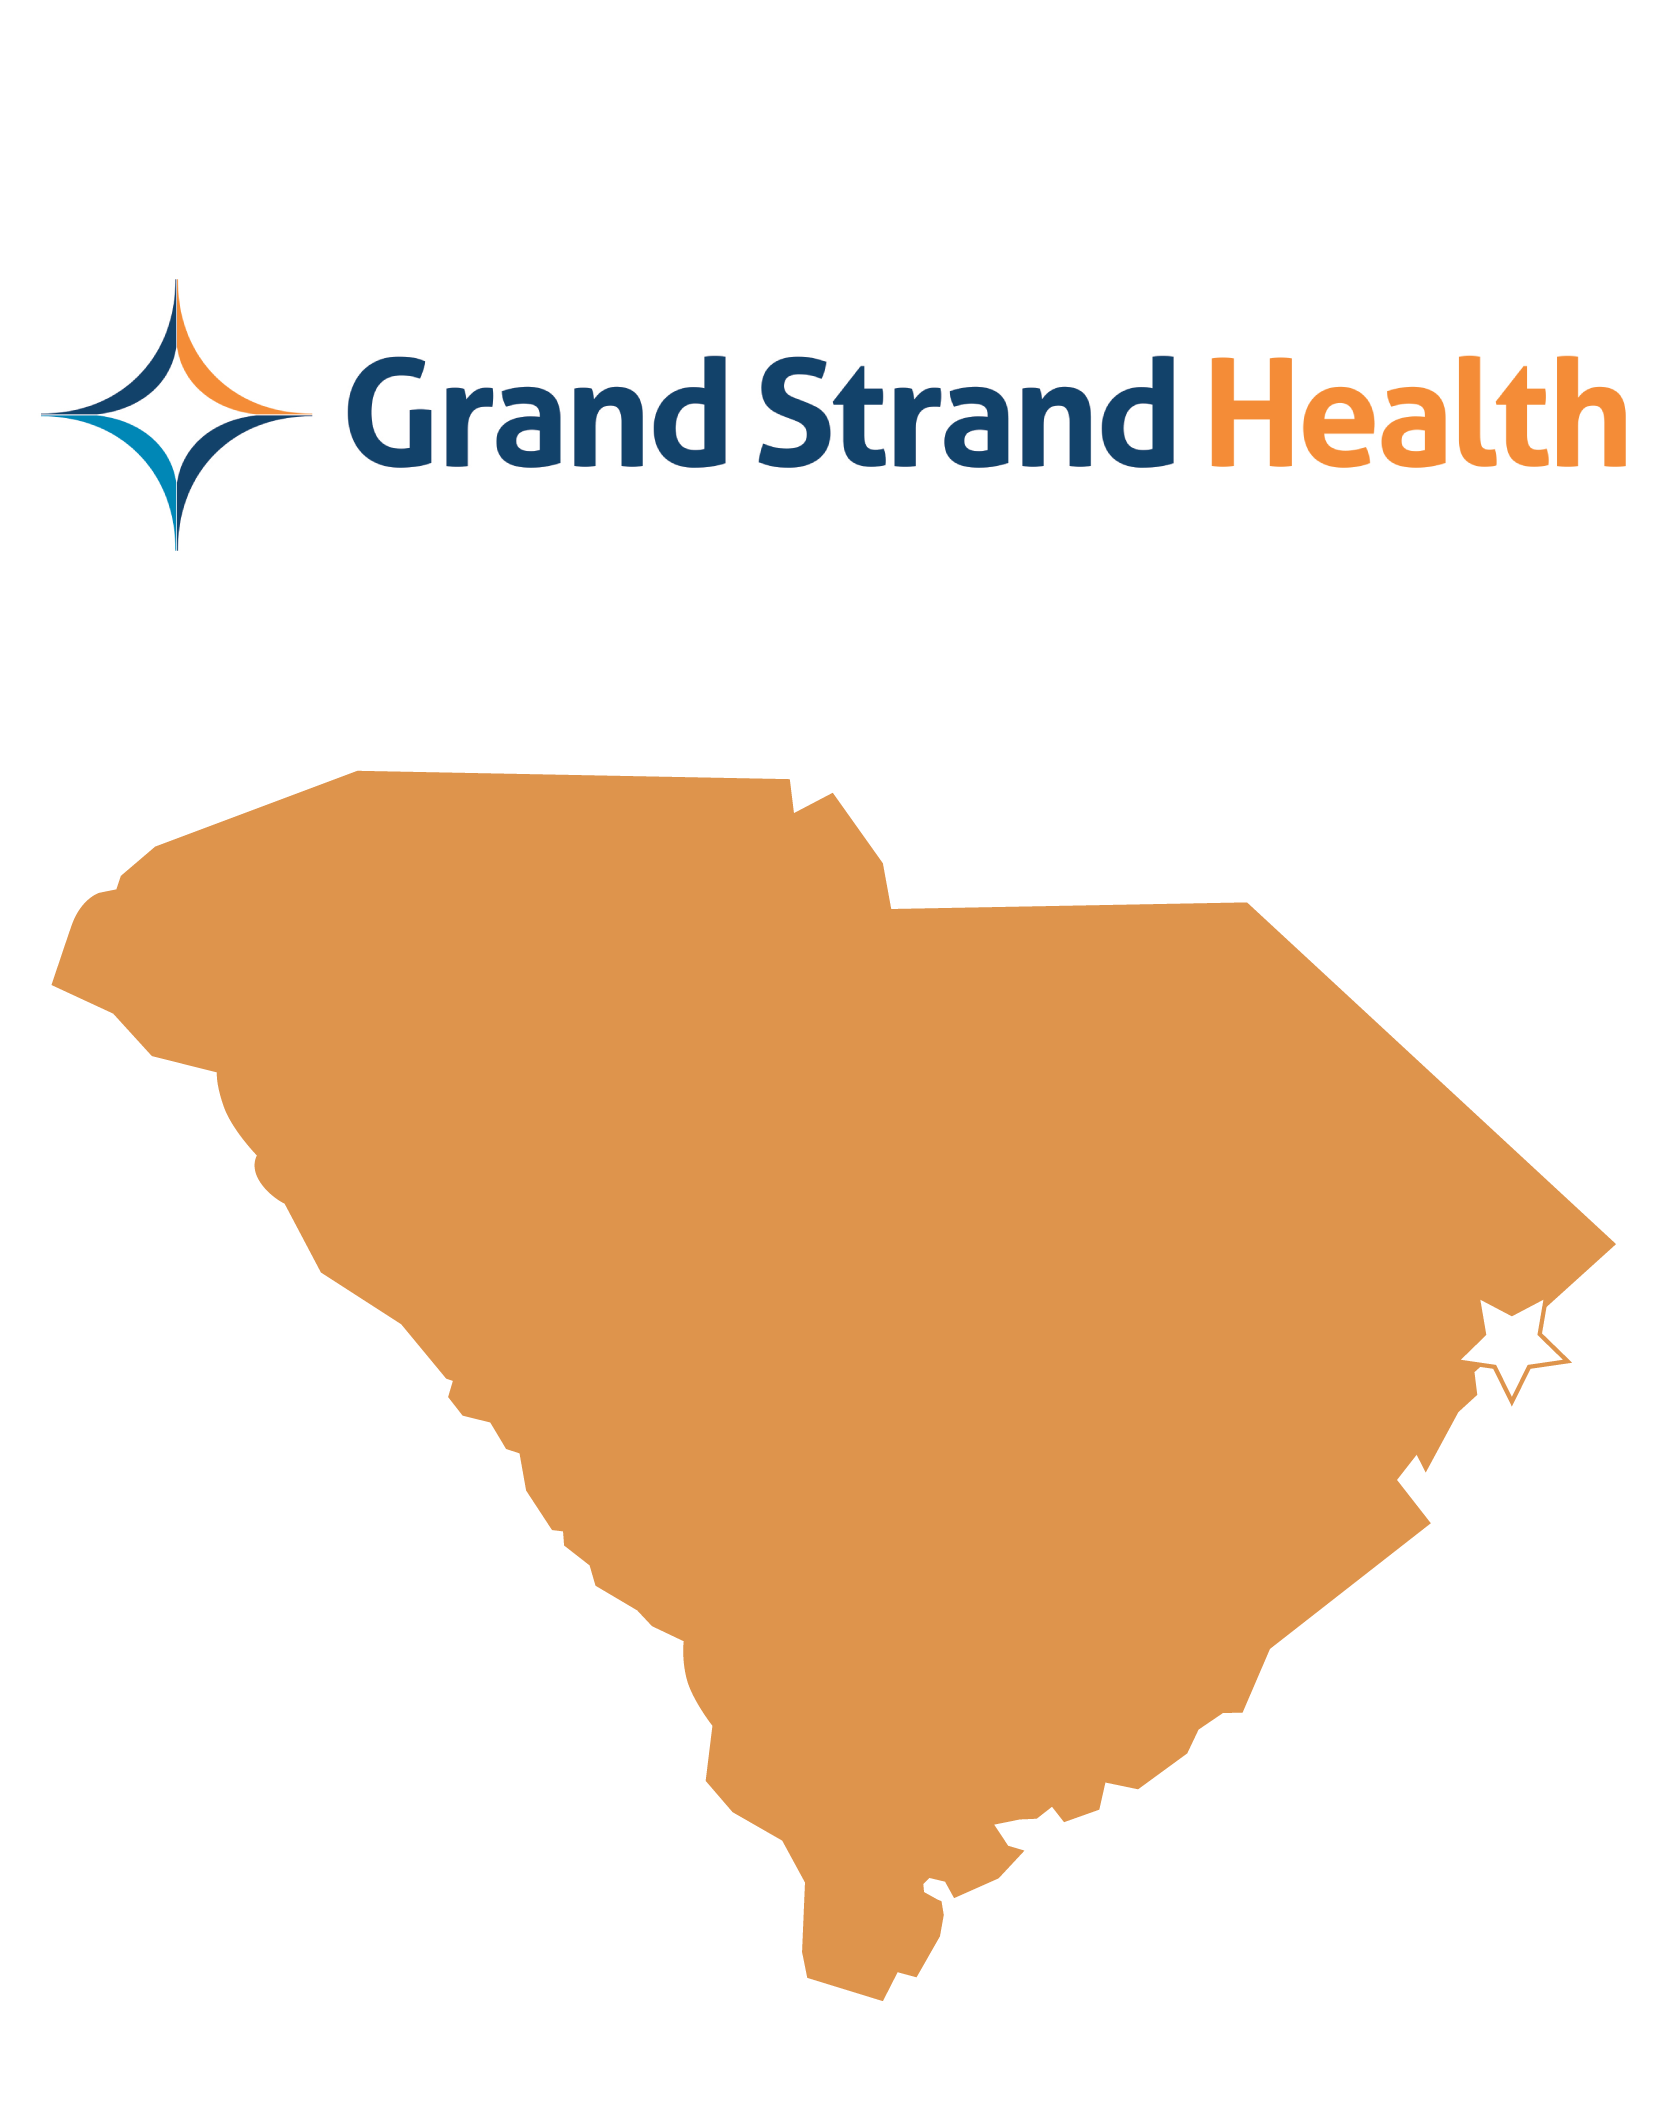 Grand Strand Health in Myrtle Beach, South Carolina